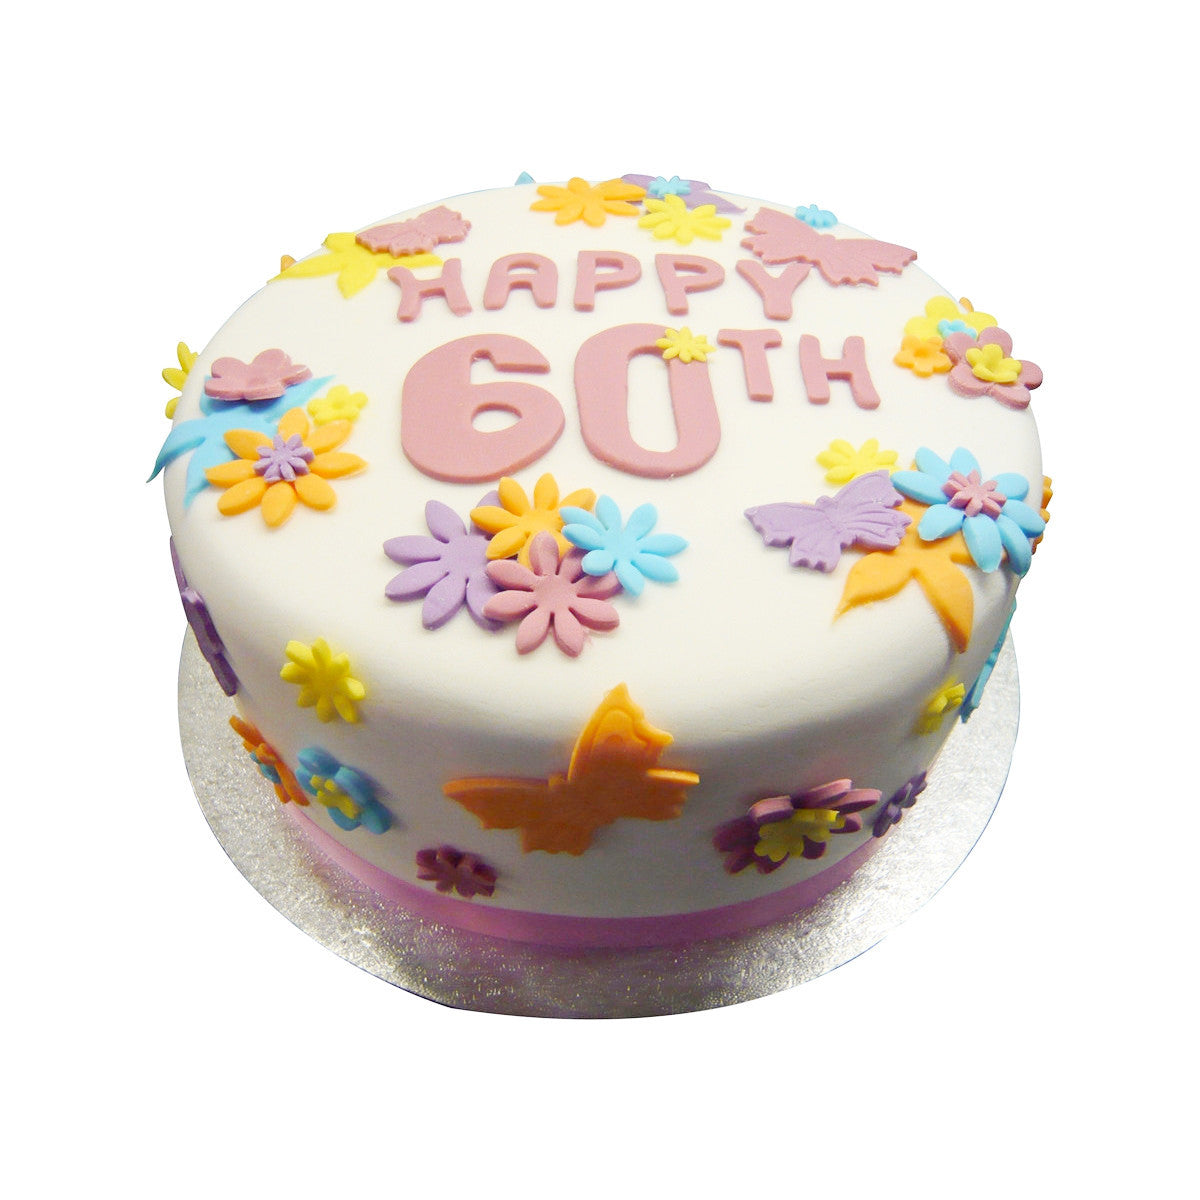 HAPPY 50TH BIRTHDAY CAKE – Aus Lanka Delivery